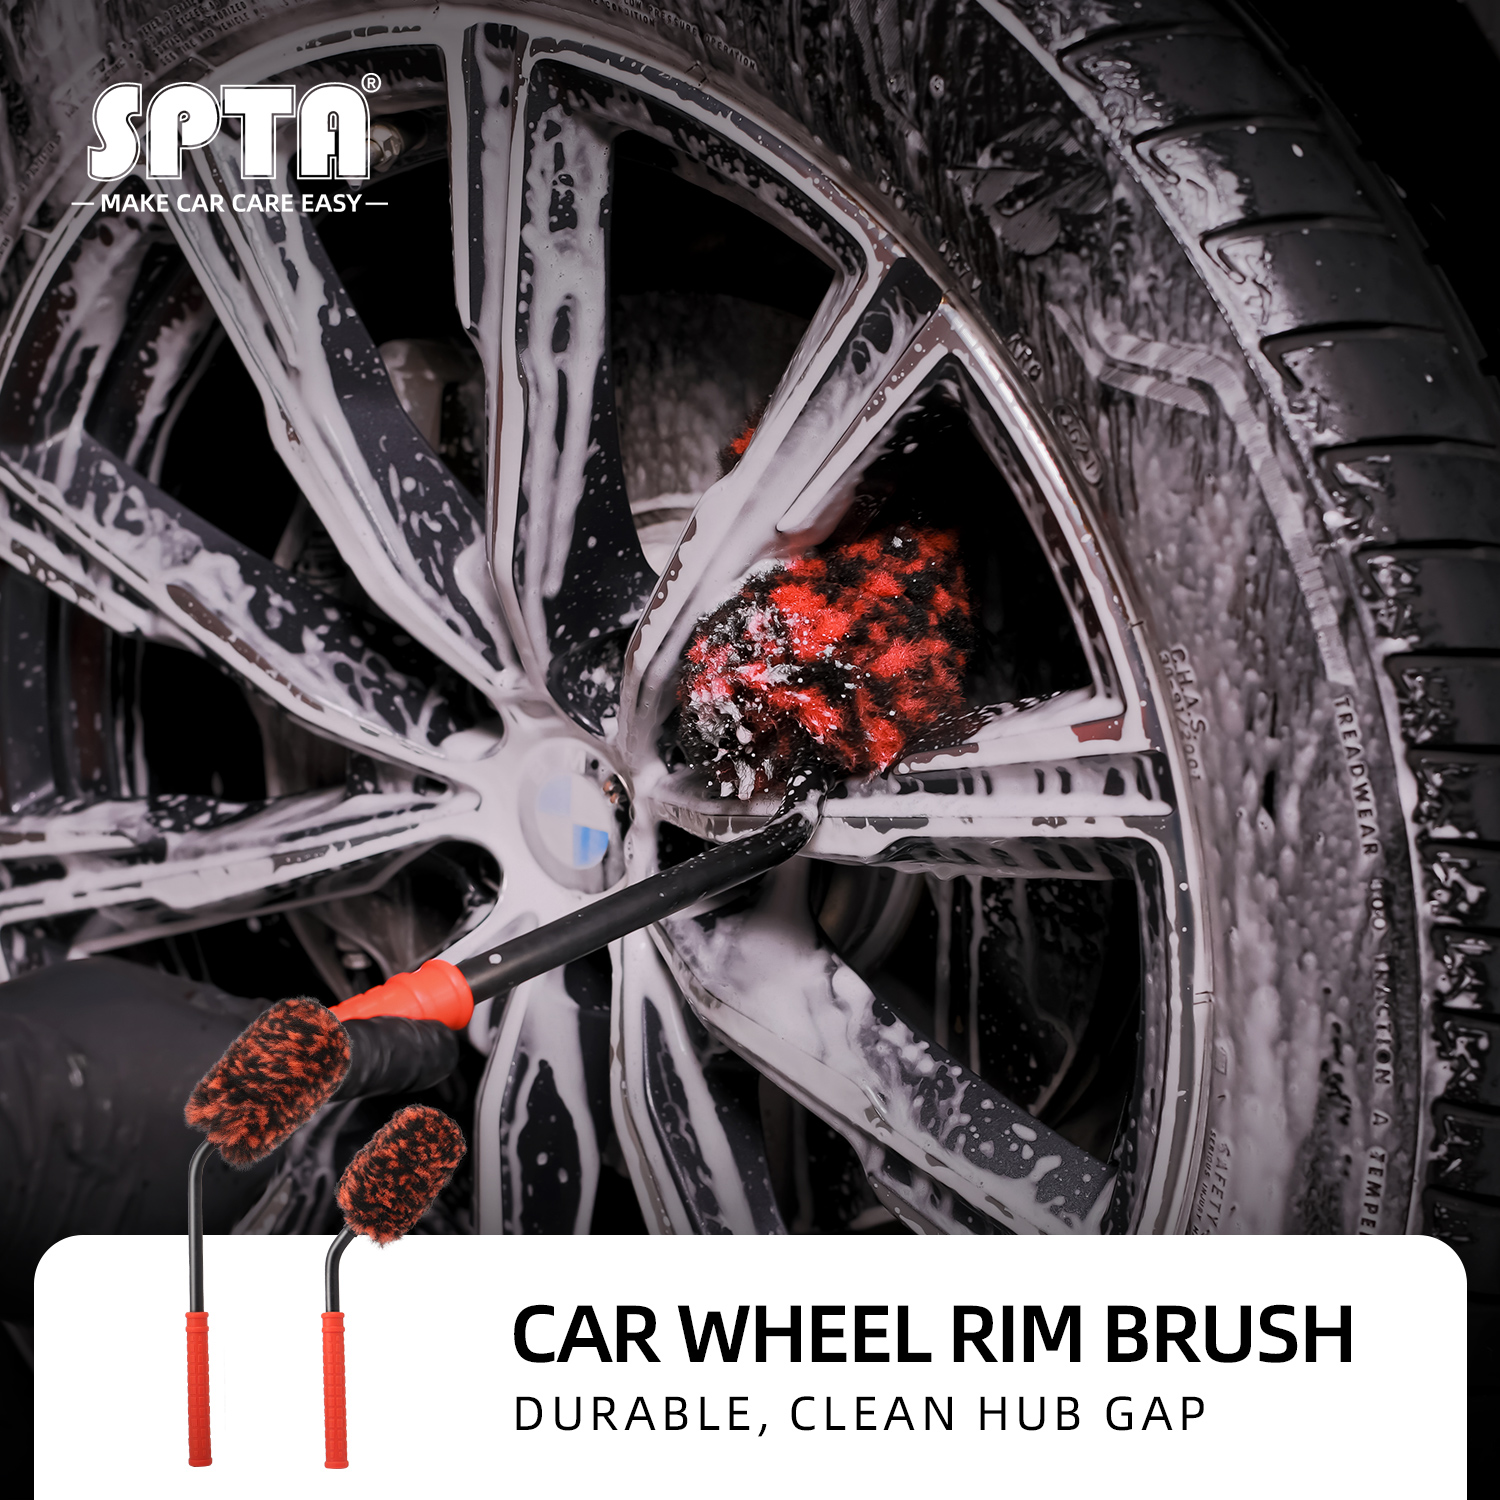 2PCS Car Tire Cleaning Brush Soft Bristle And Microfiber Wheel Rim